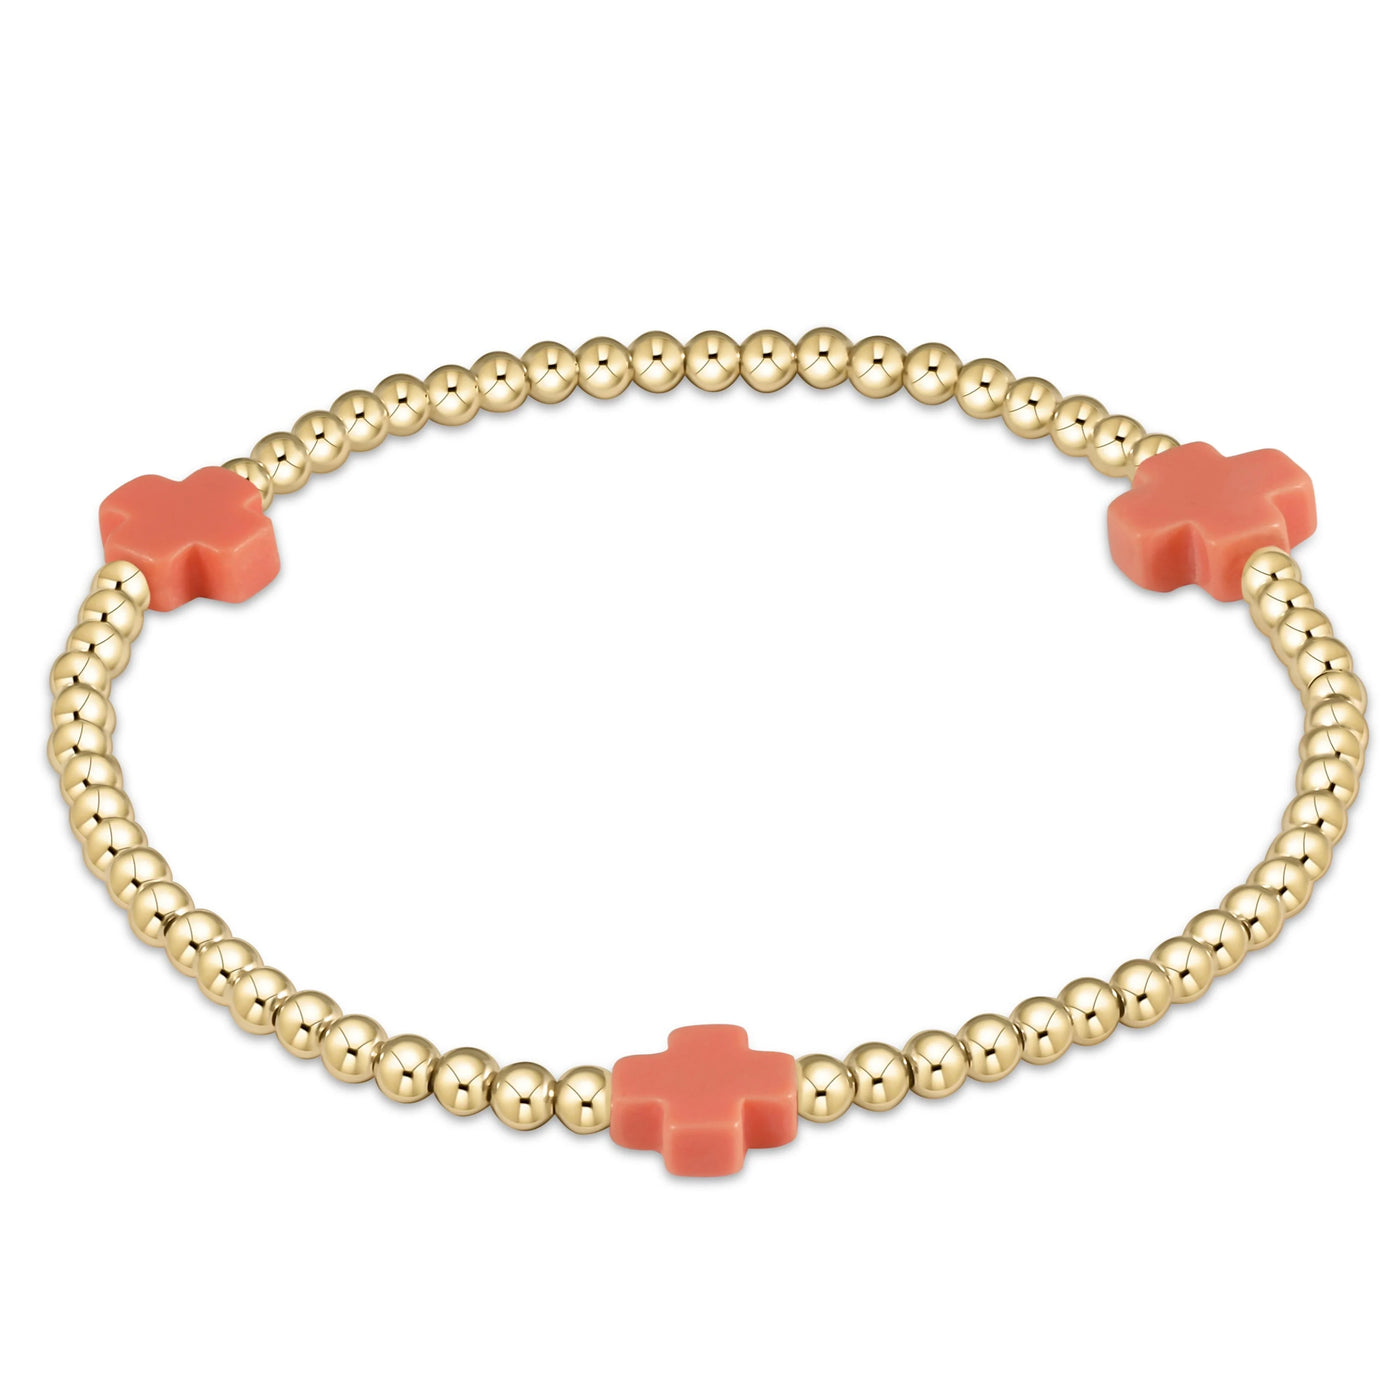 Enewton signature cross gold pattern 3mm bead bracelet - coral